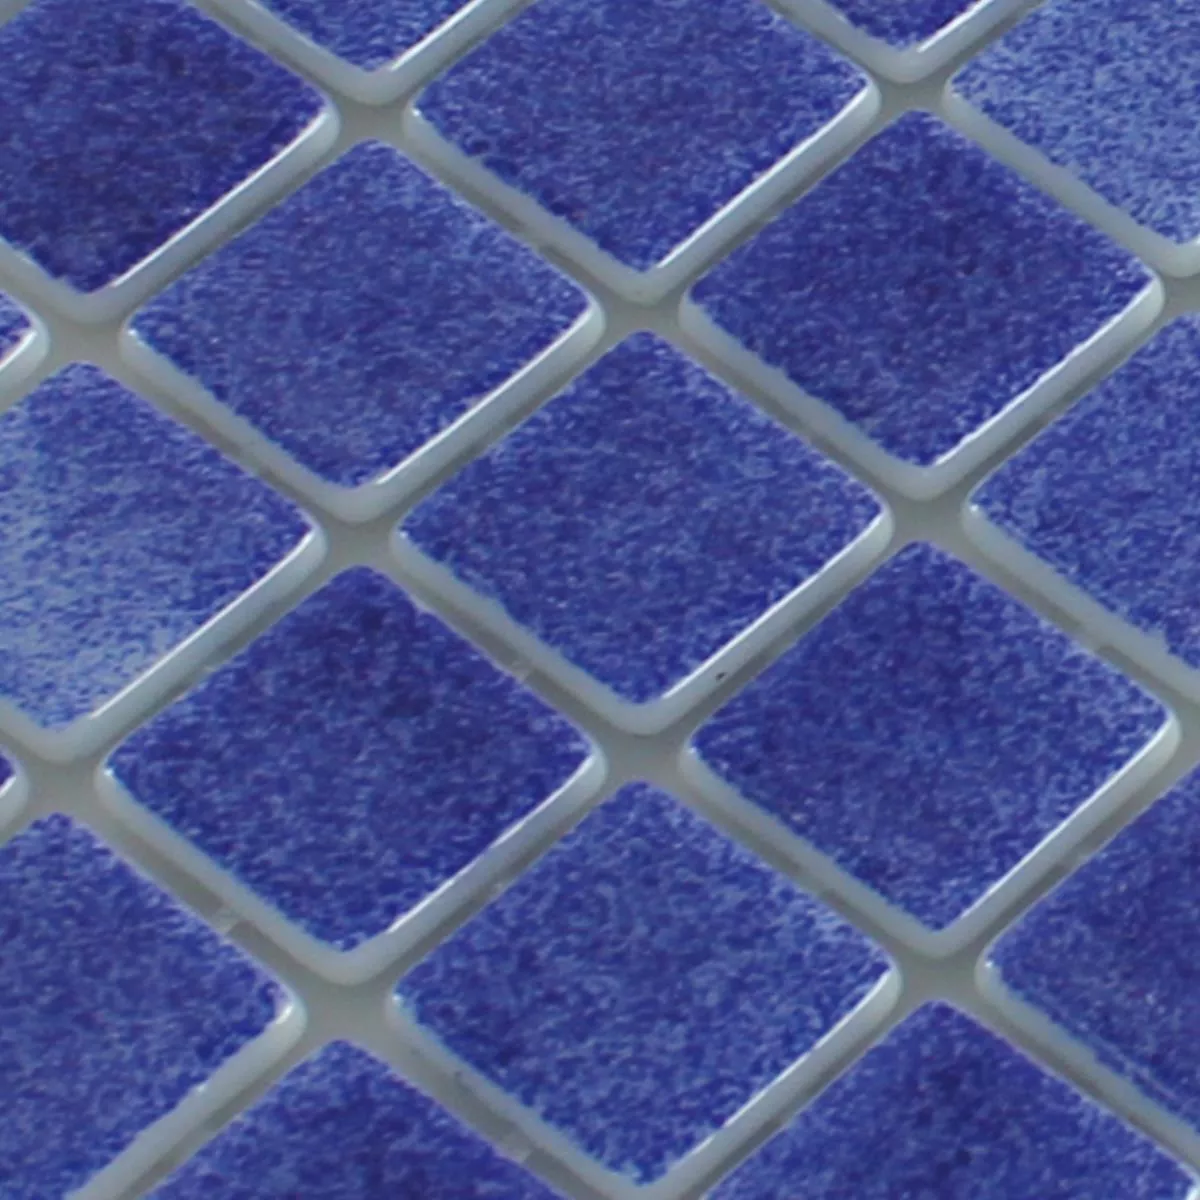 Prøve Glas Swimmingpool Mosaik Lagune R11C Mørkeblå